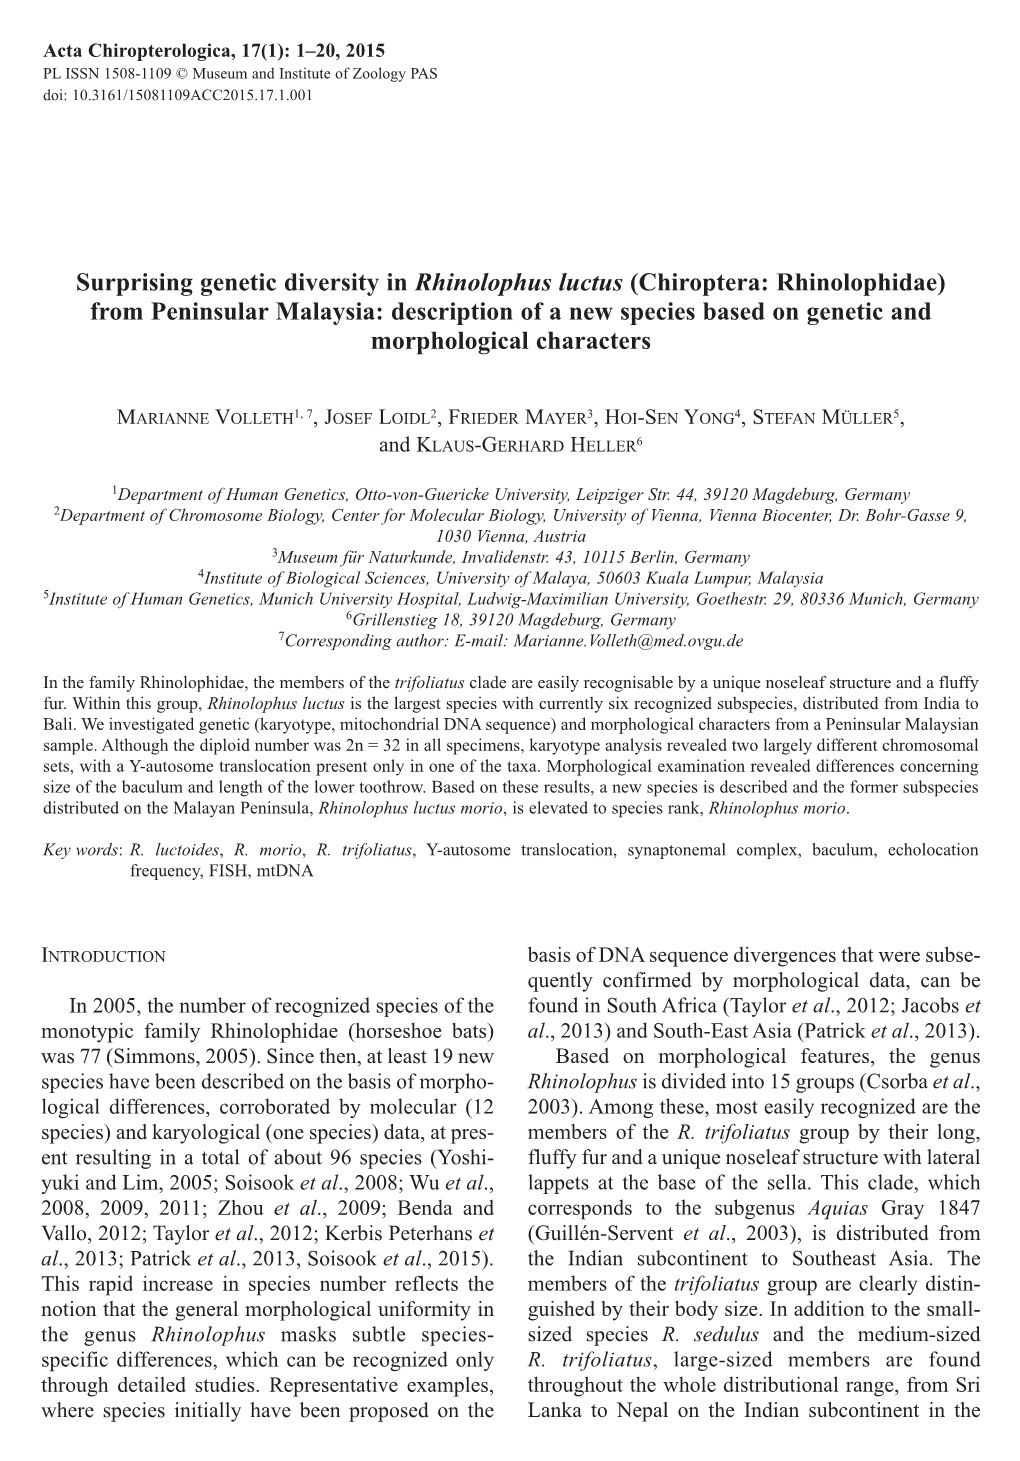 Surprising Genetic Diversity in &lt;I&gt;Rhinolophus Luctus&lt;/I